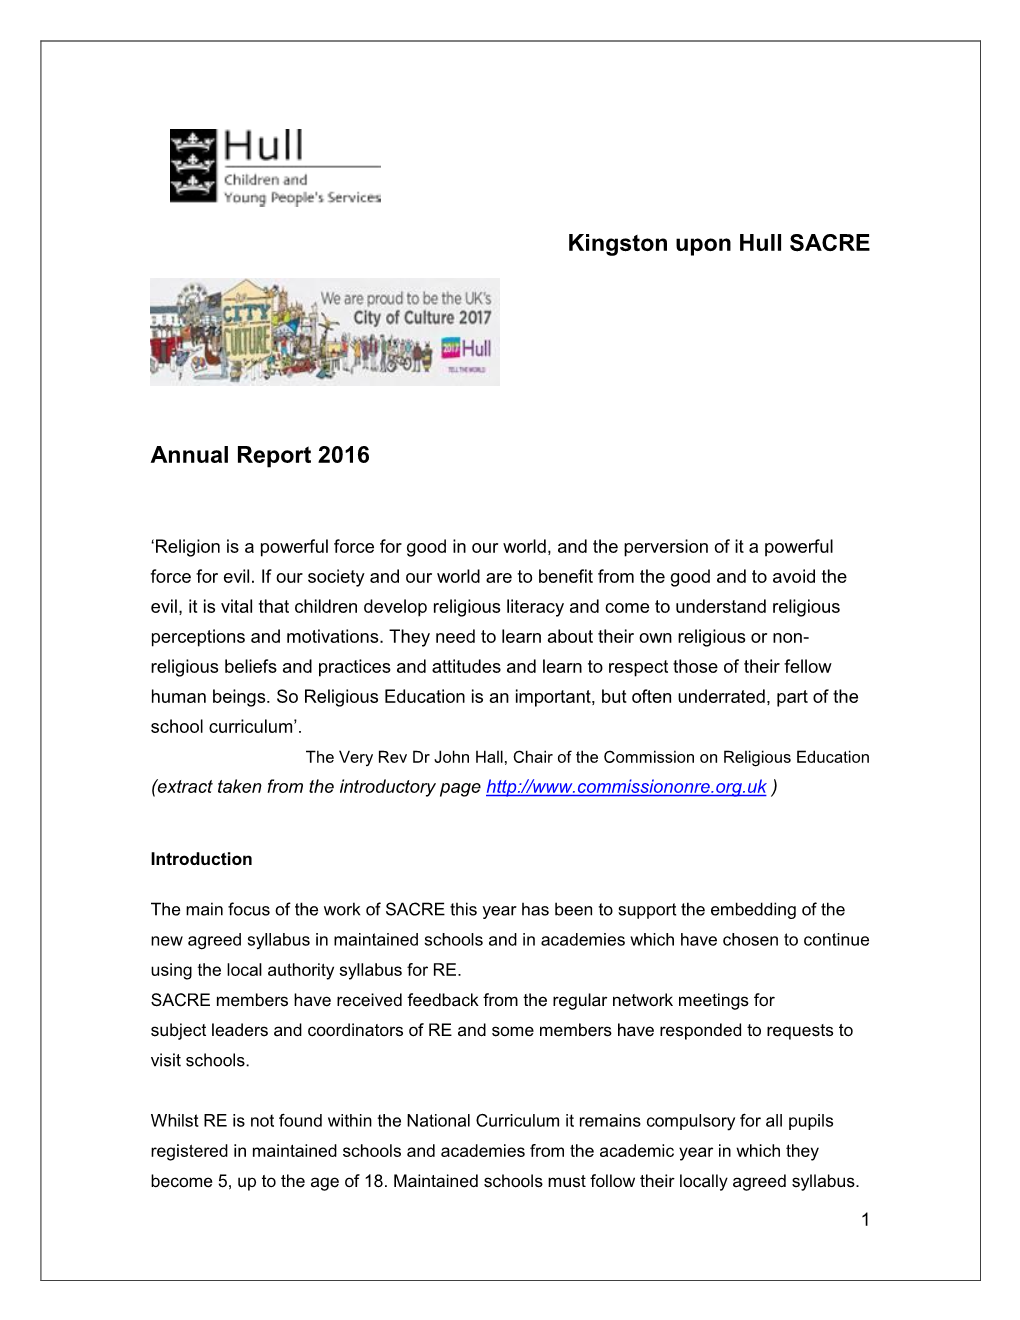 Kingston Upon Hull SACRE Annual Report 2016